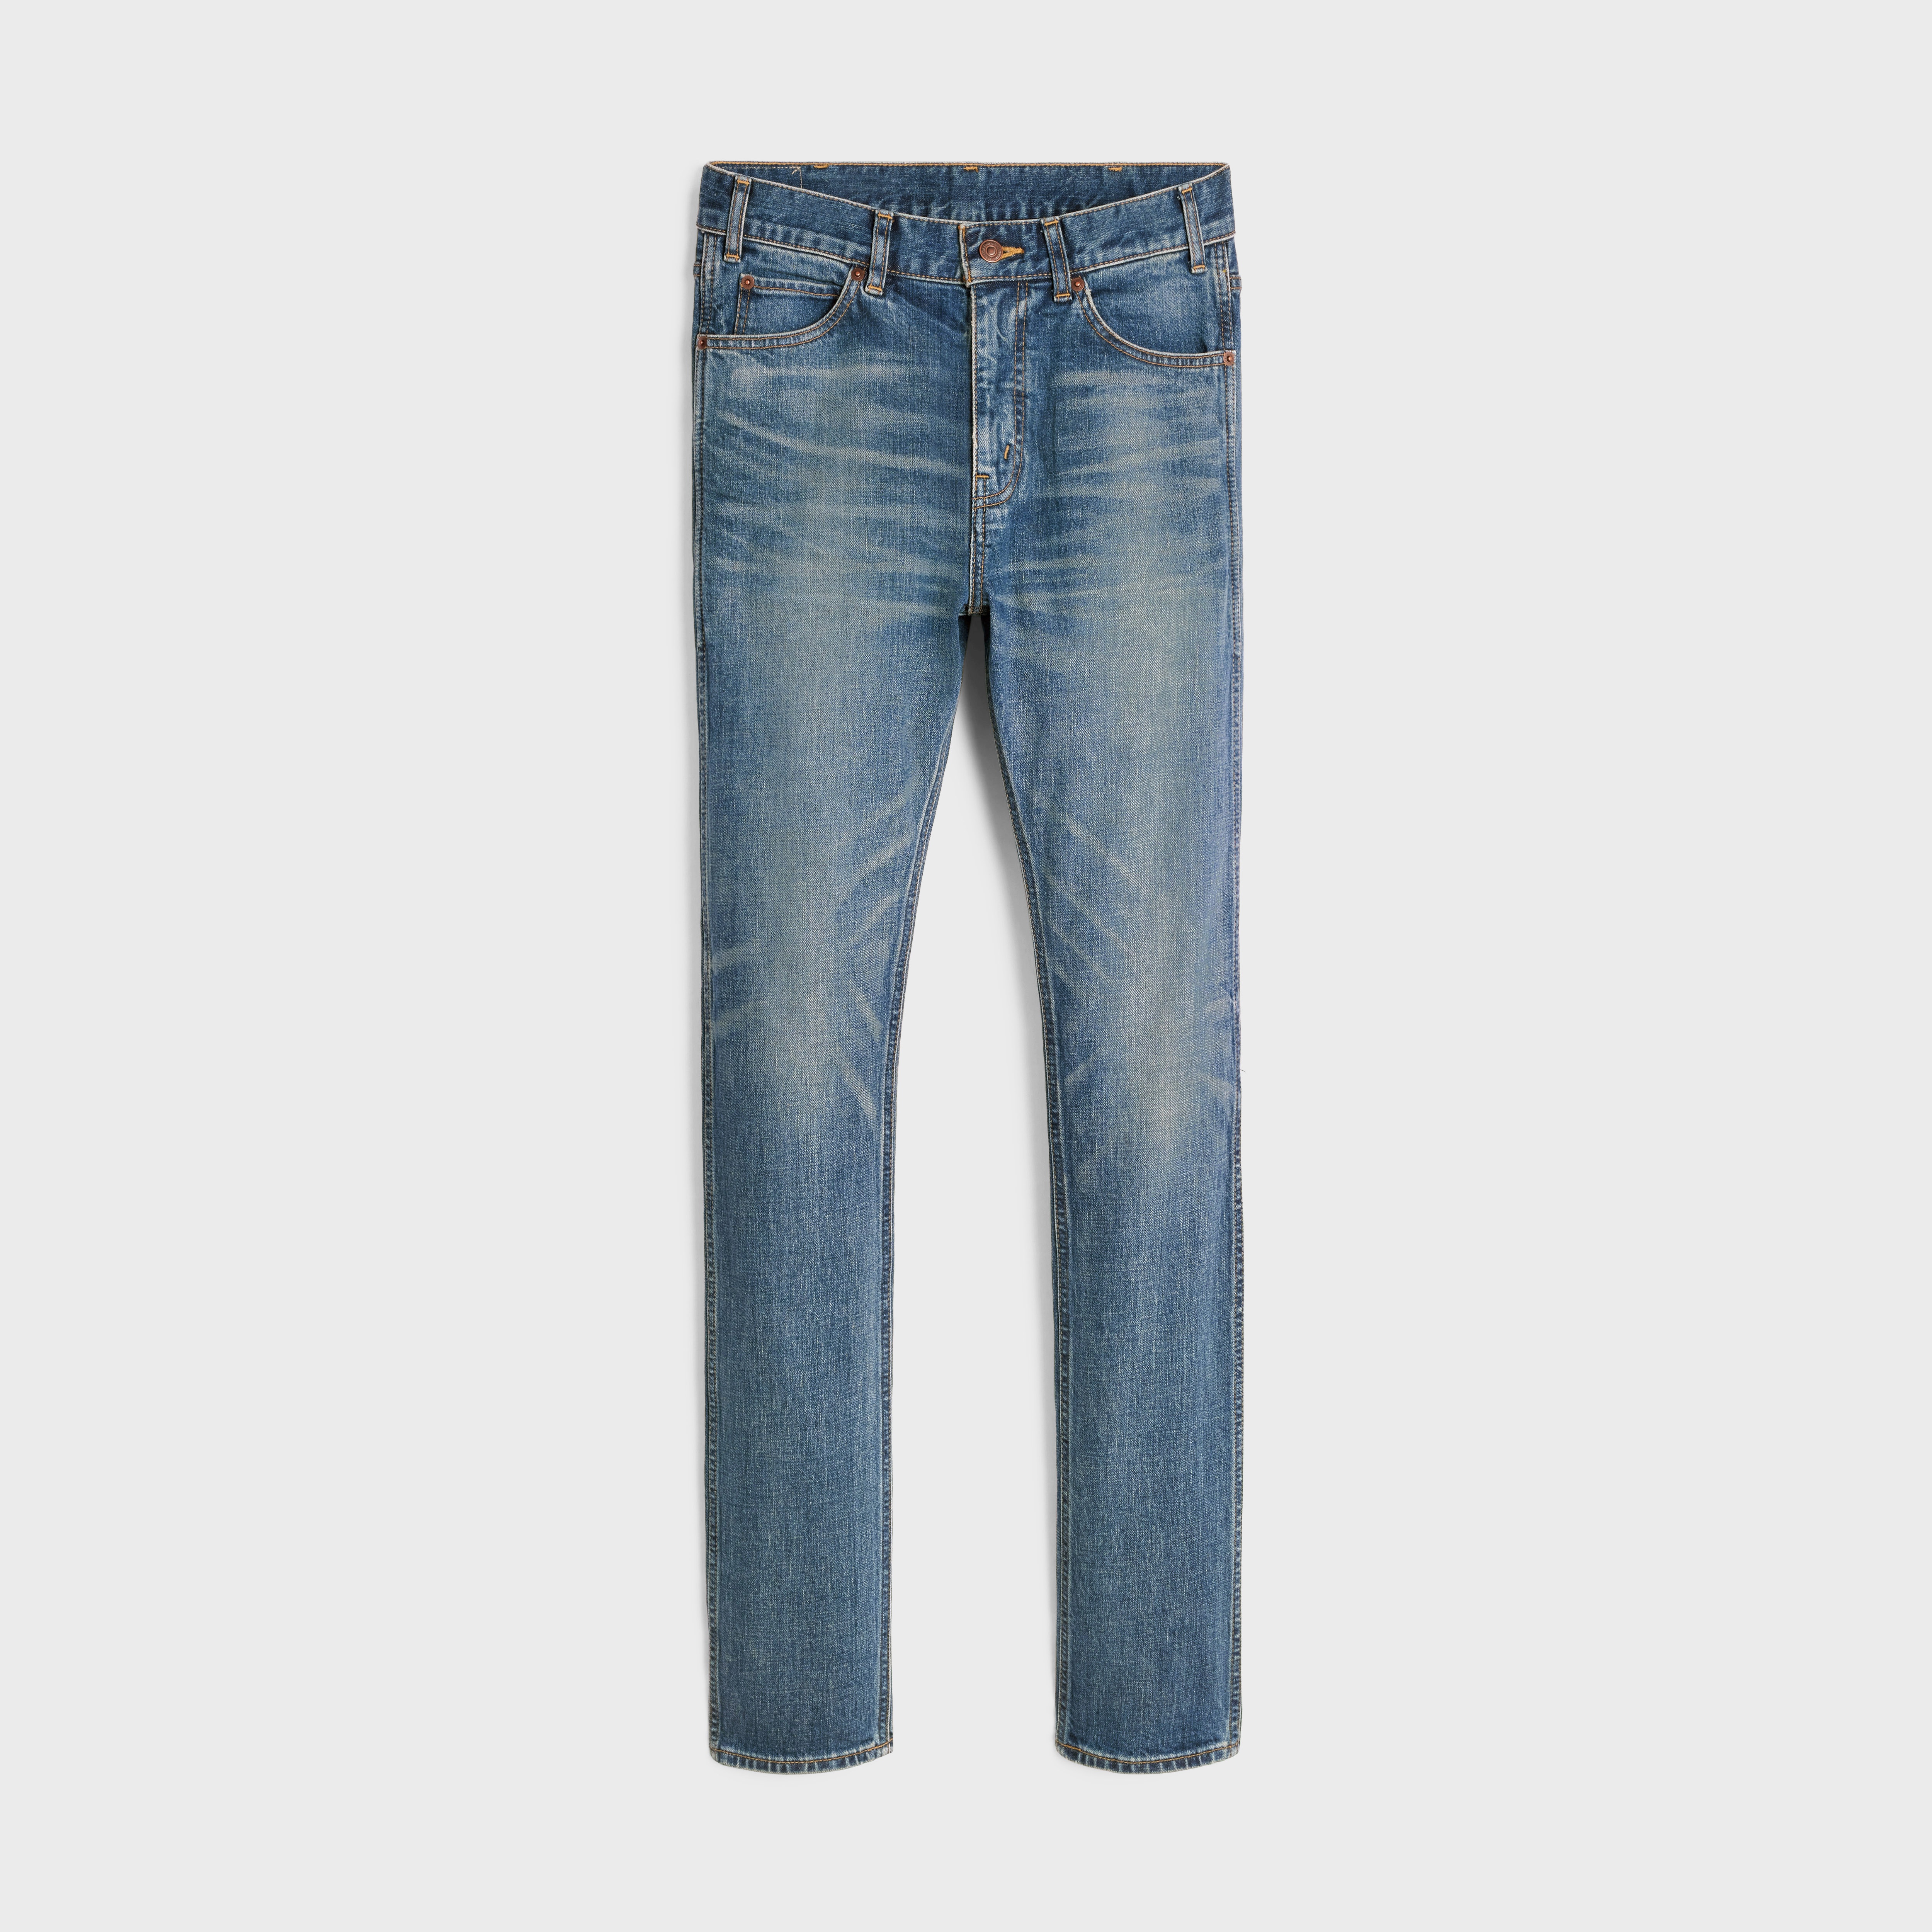 skinny jeans in vintage union wash denim - 1